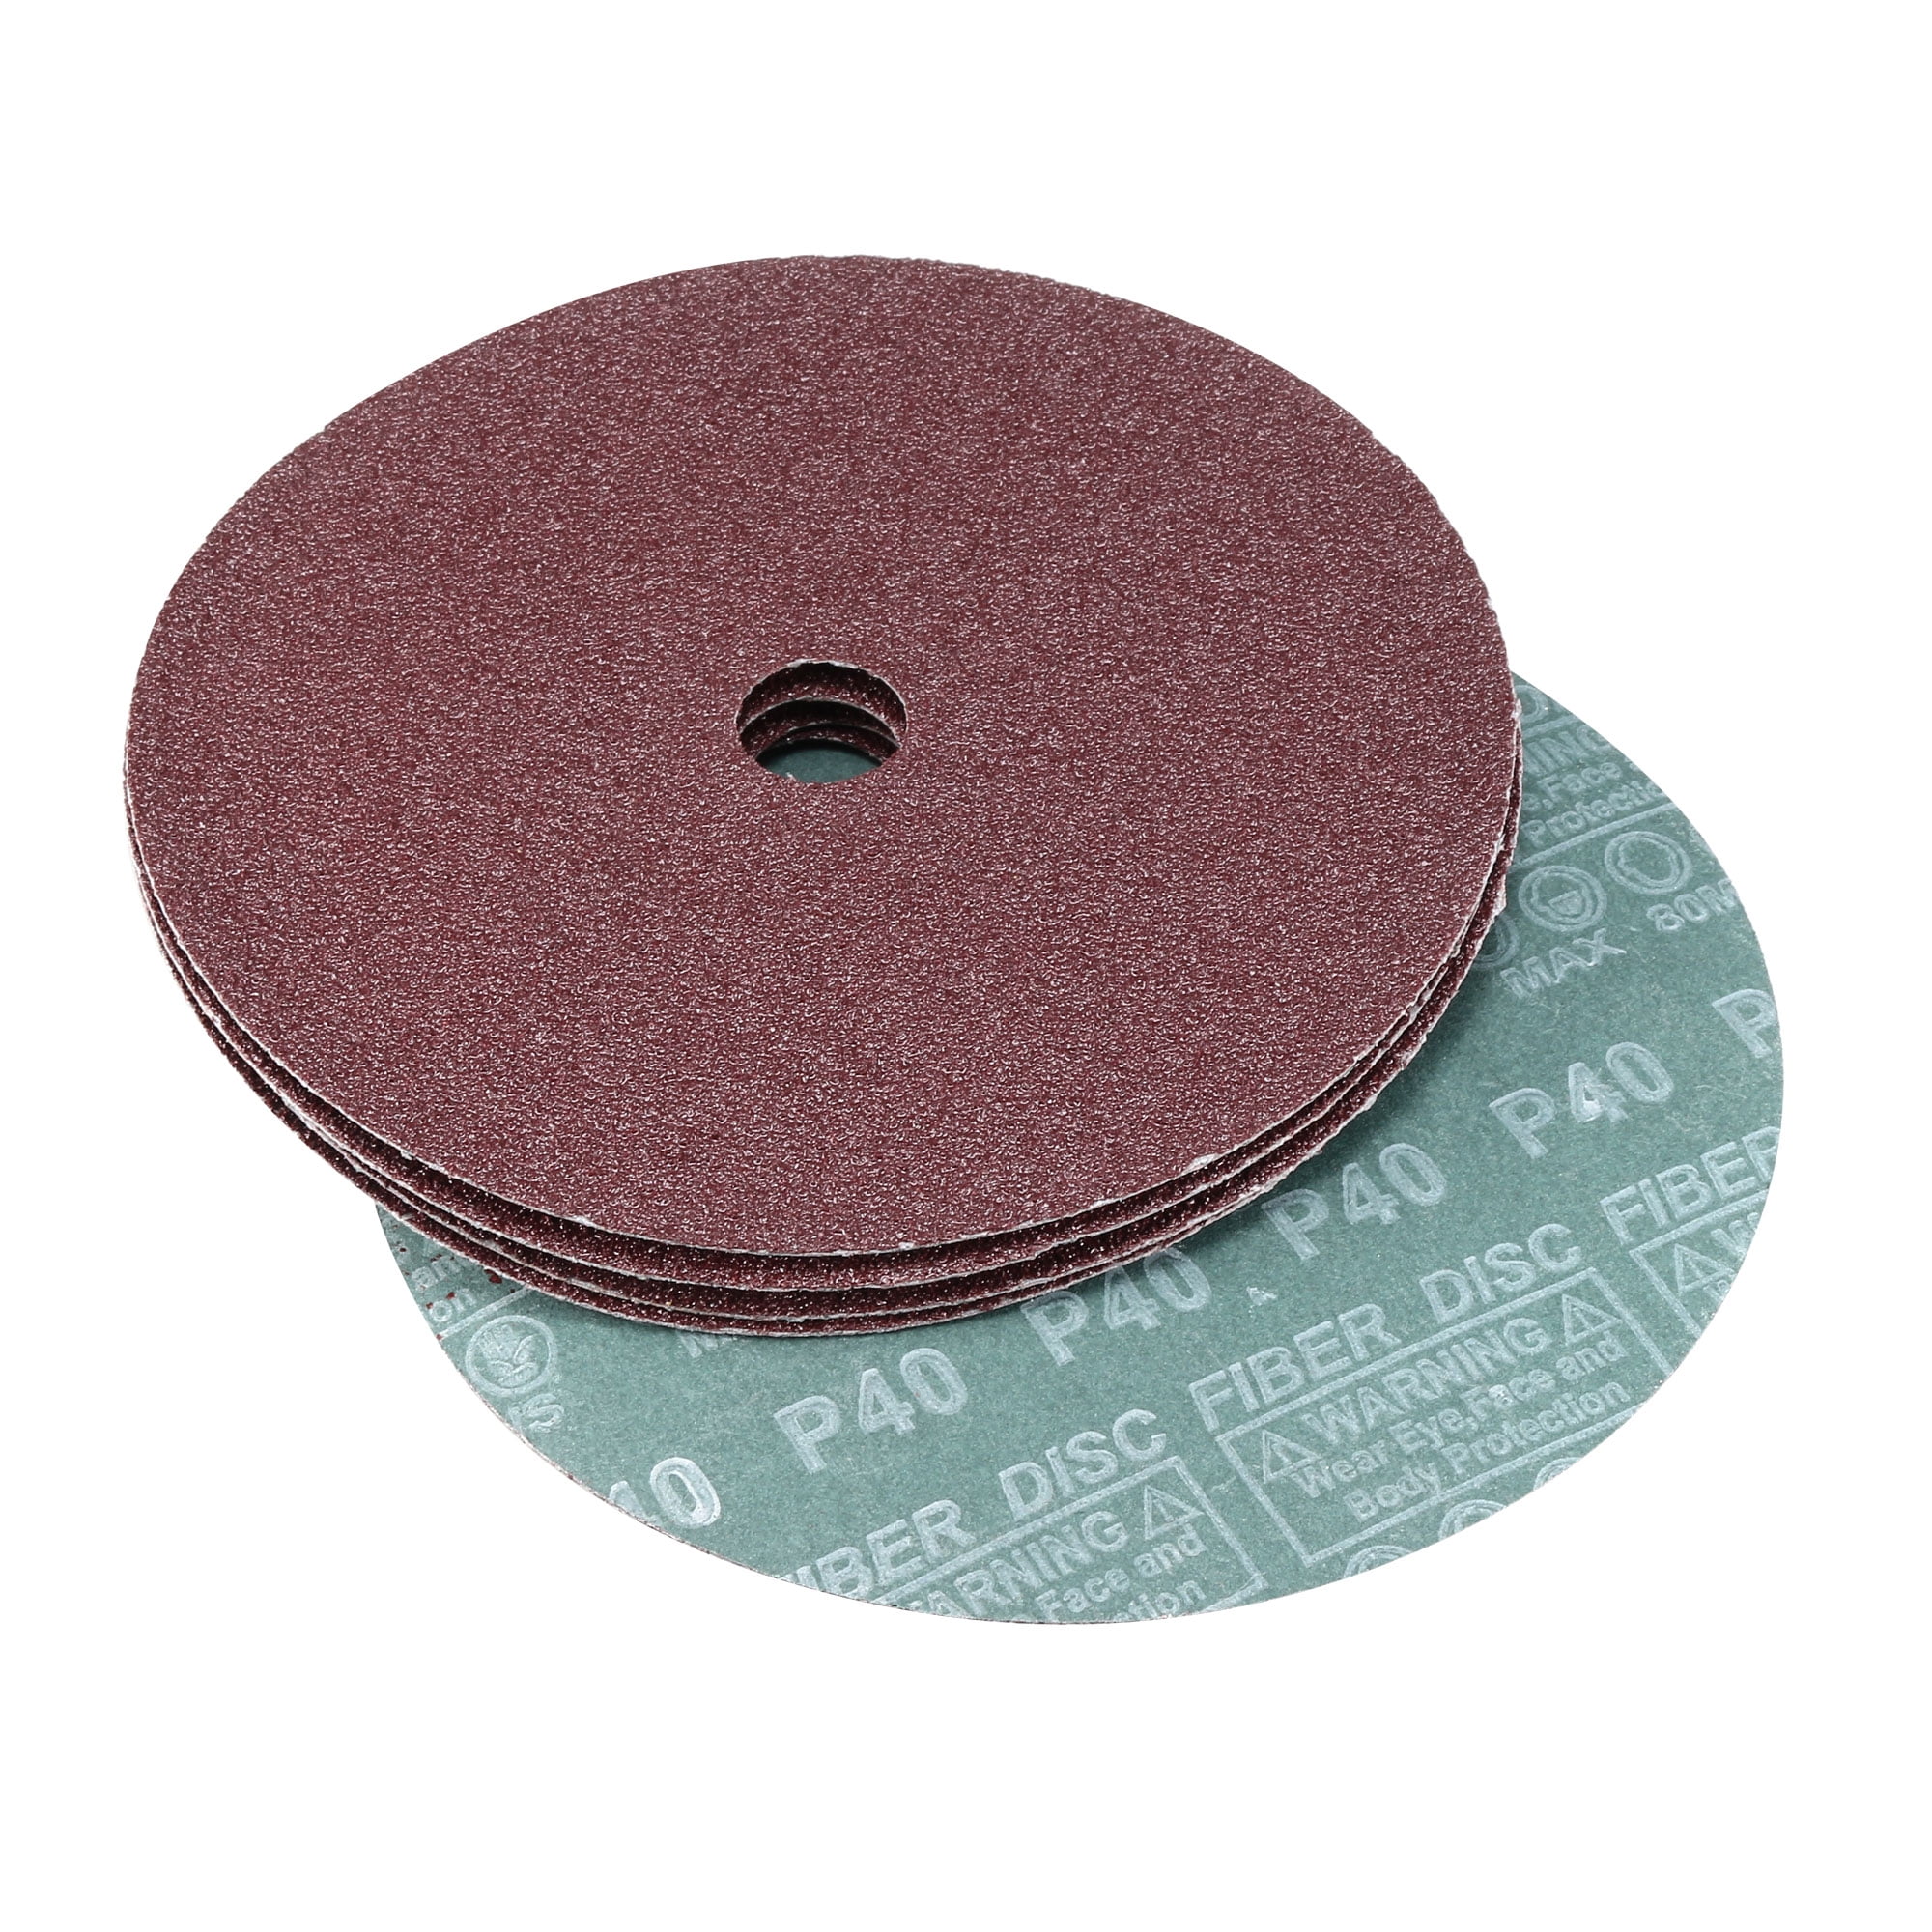 uxcell 7-Inch x 7/8-Inch Aluminum Oxide Resin Fiber Discs Center Hole 36 Grit Sanding Grinding Discs 5 Pack 